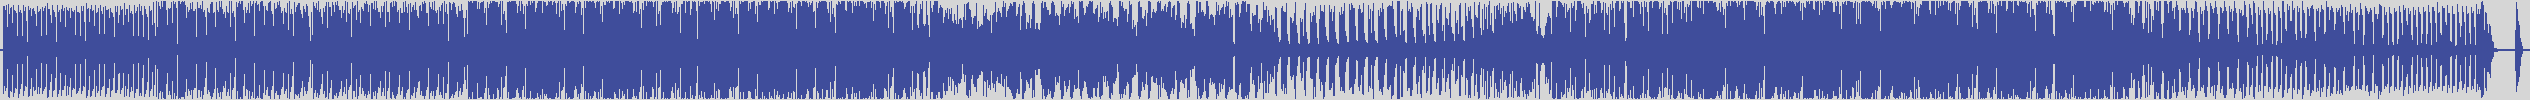 nf_boyz_records [NFY052] Sonny Boro - Talk Me [Tech House Edit] audio wave form